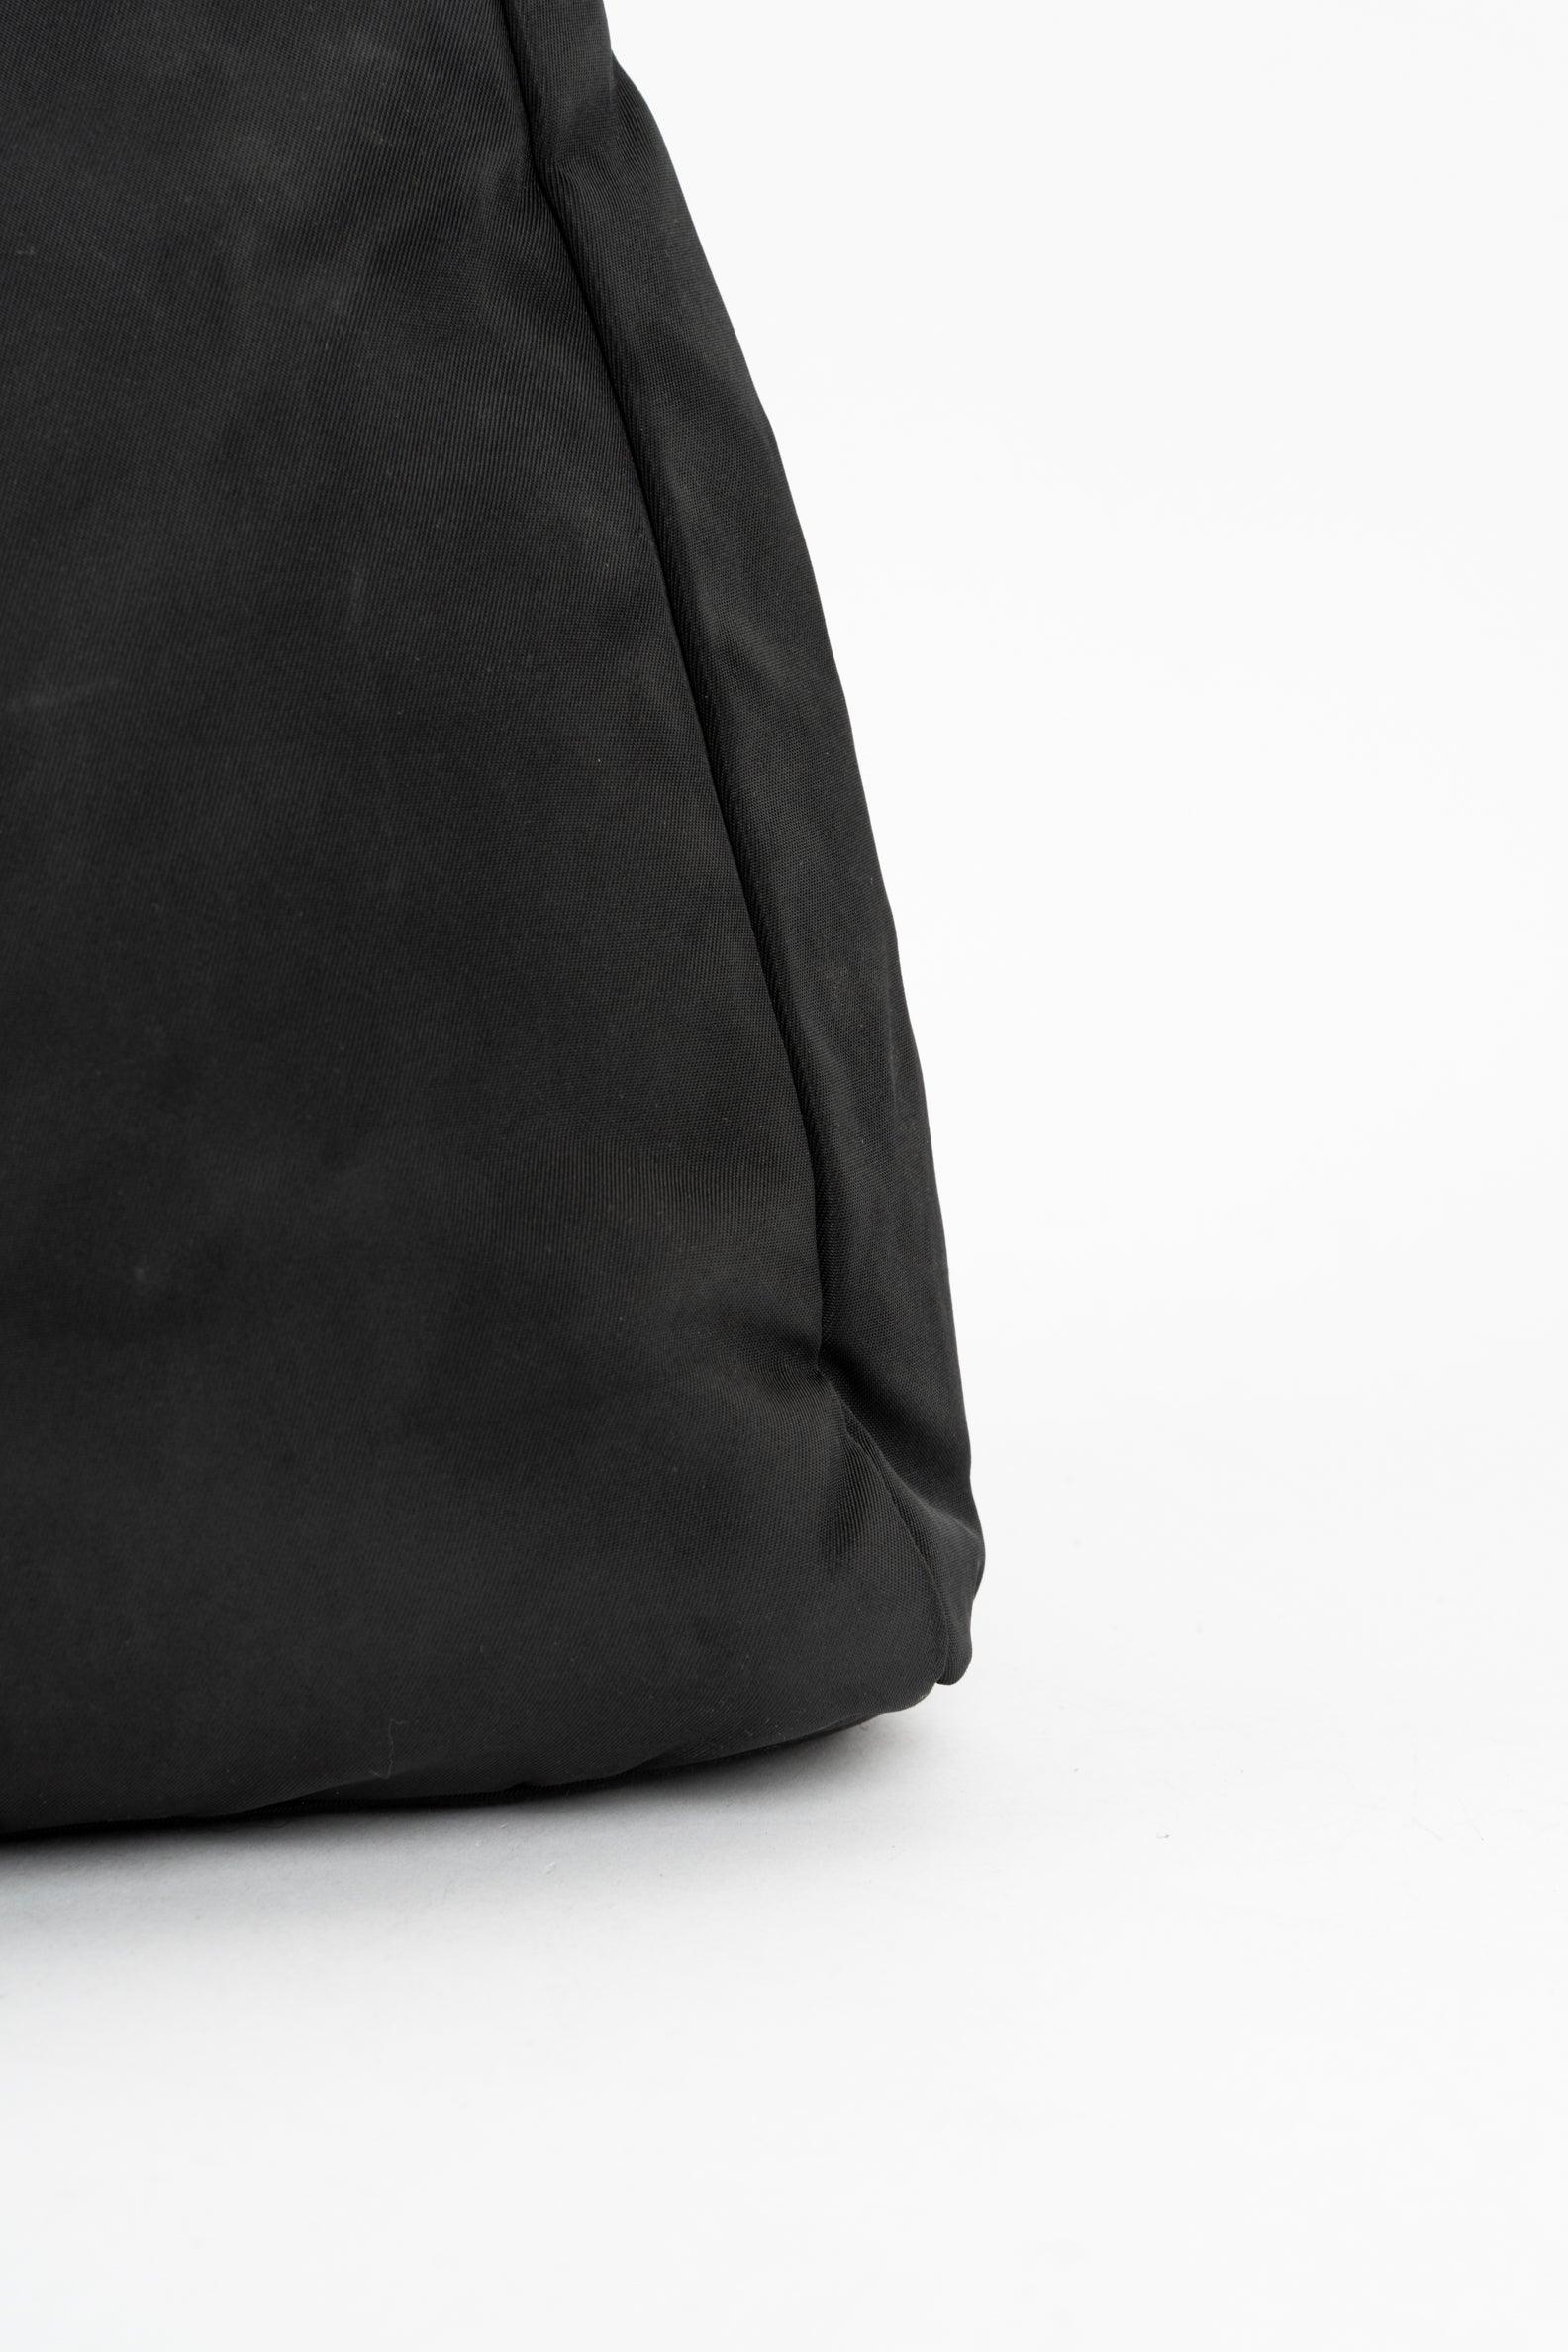 Tessuto Tote Bag Black - Volver